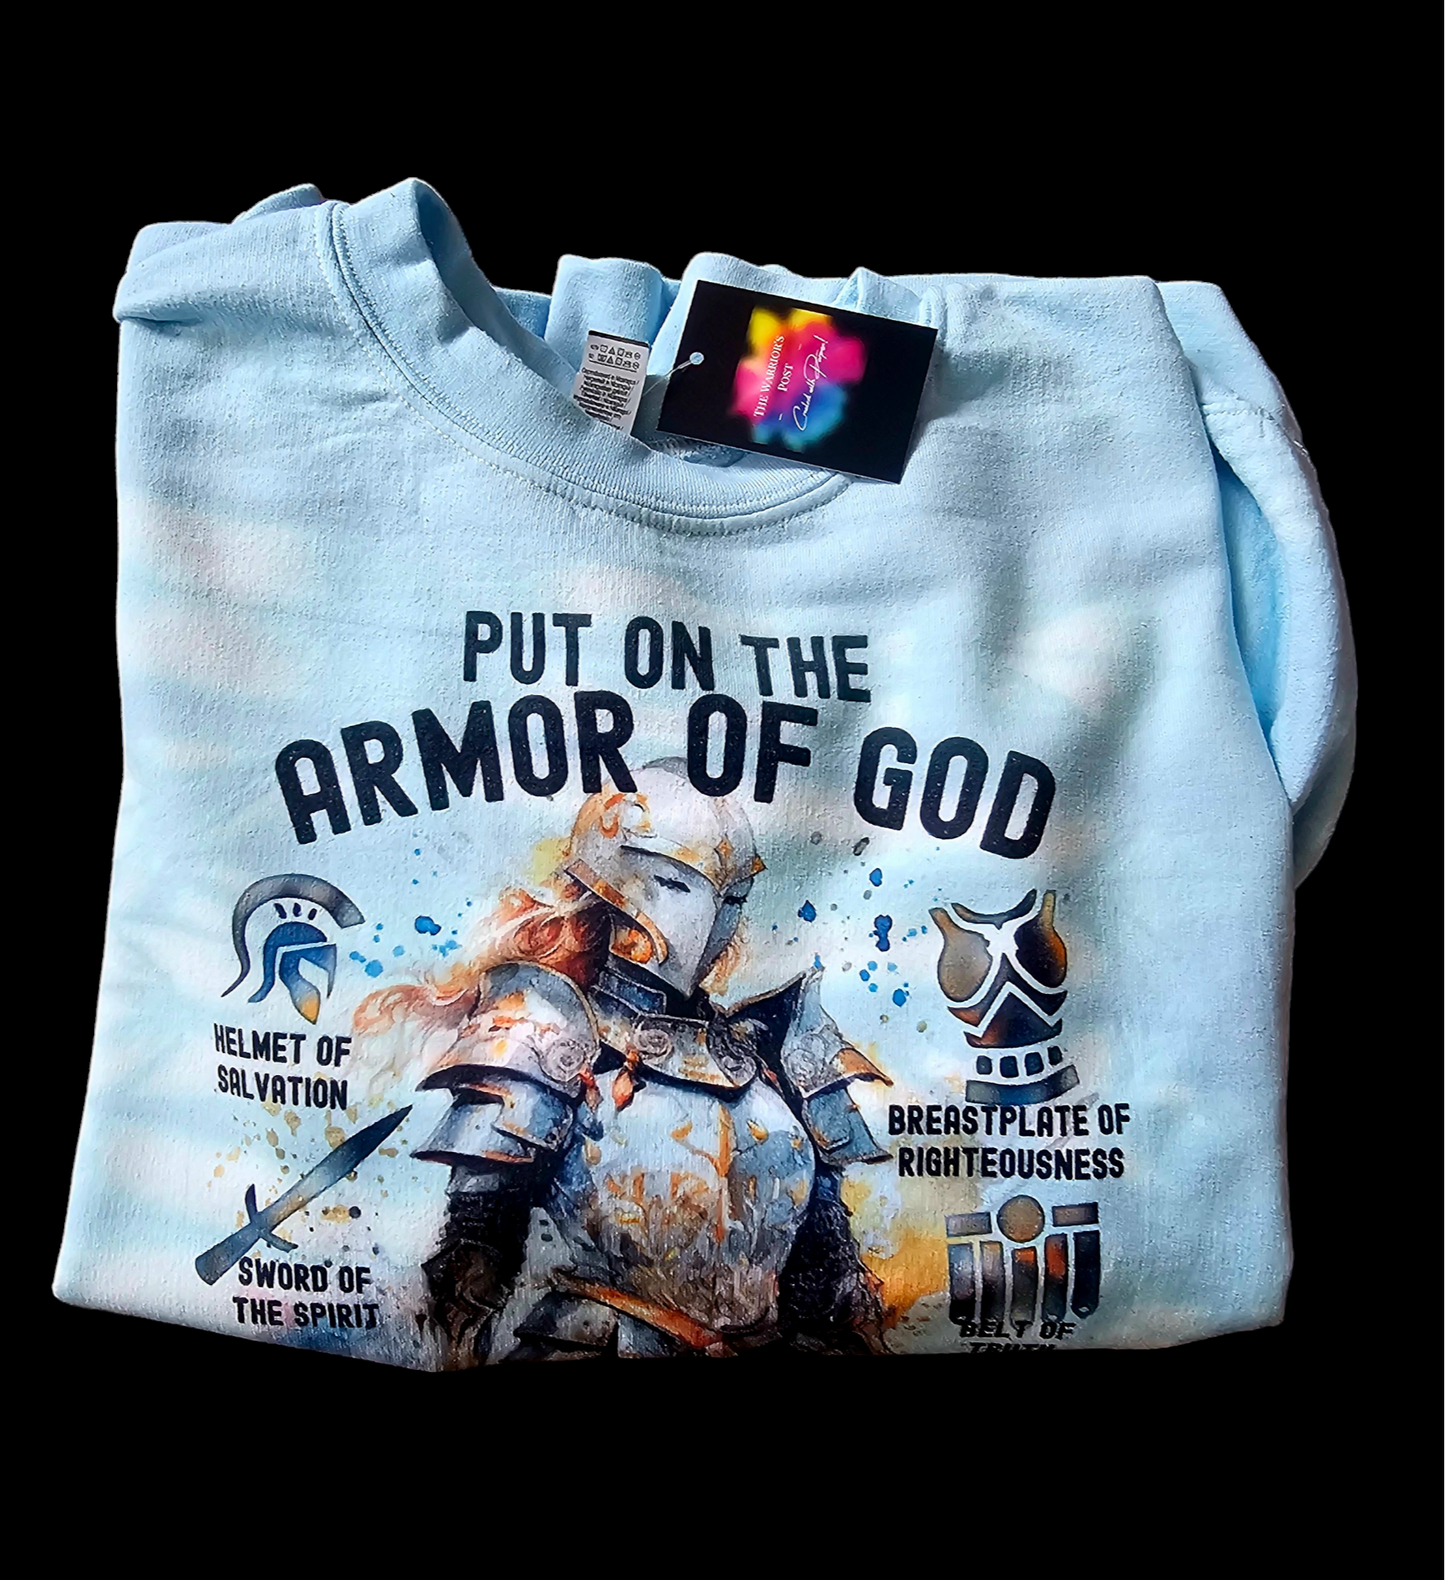 Armor of God Woman Warrior